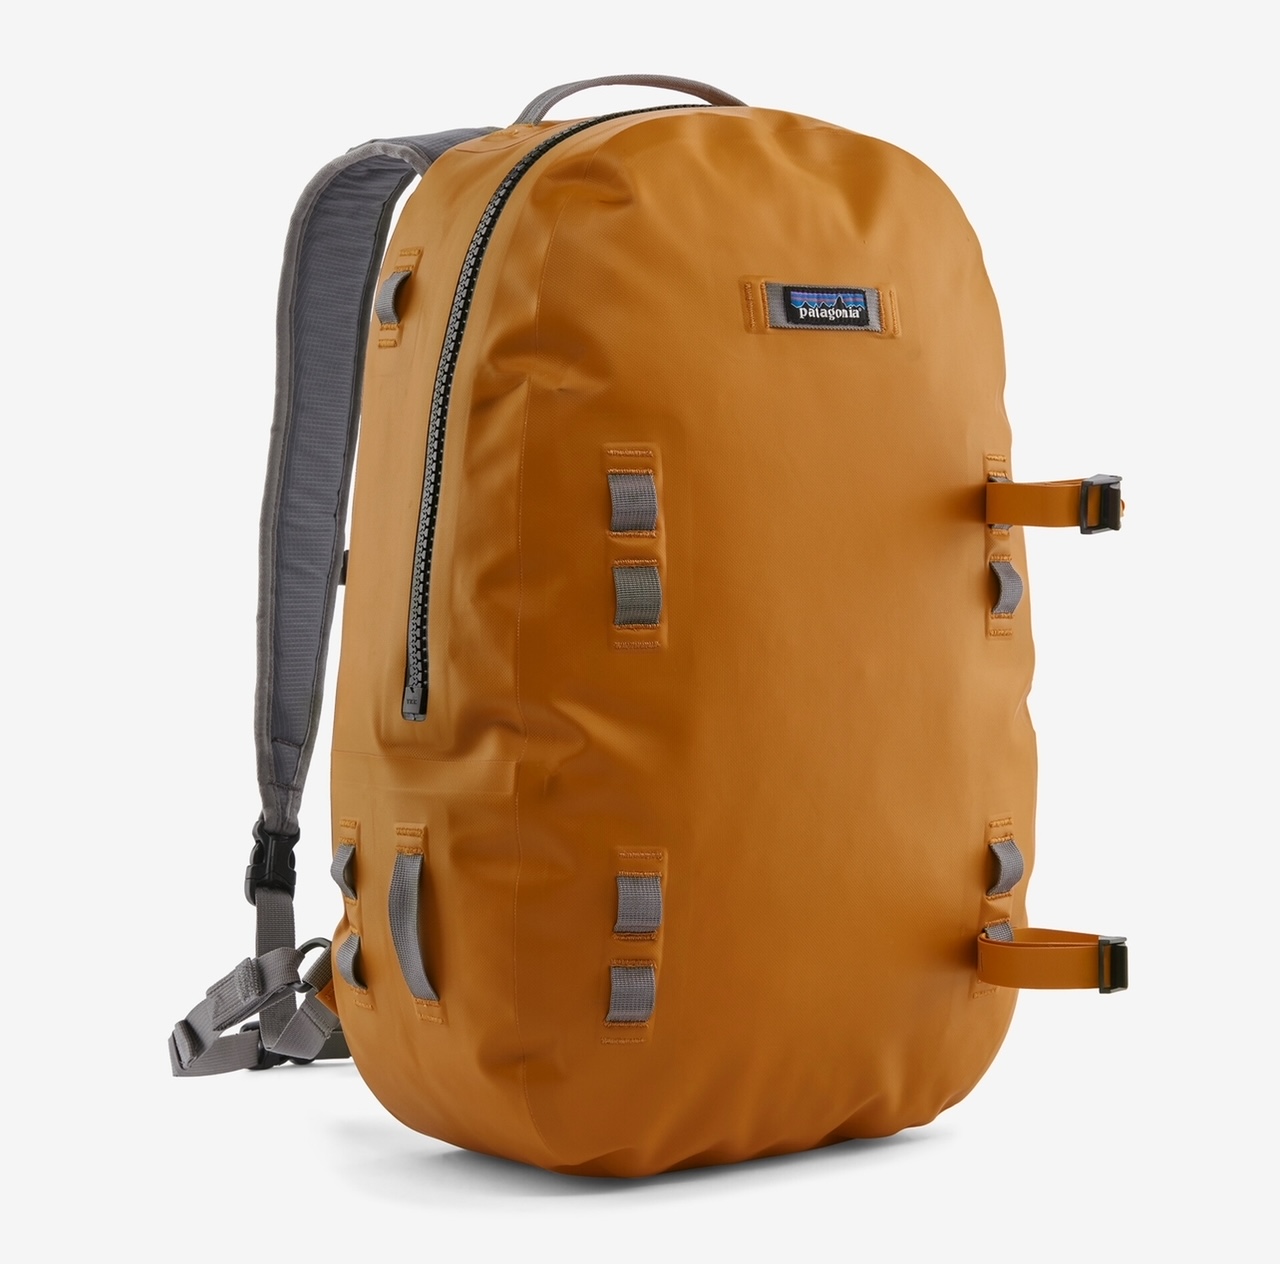 Patagonia Guidewater Backpack 29L - Golden Caramel